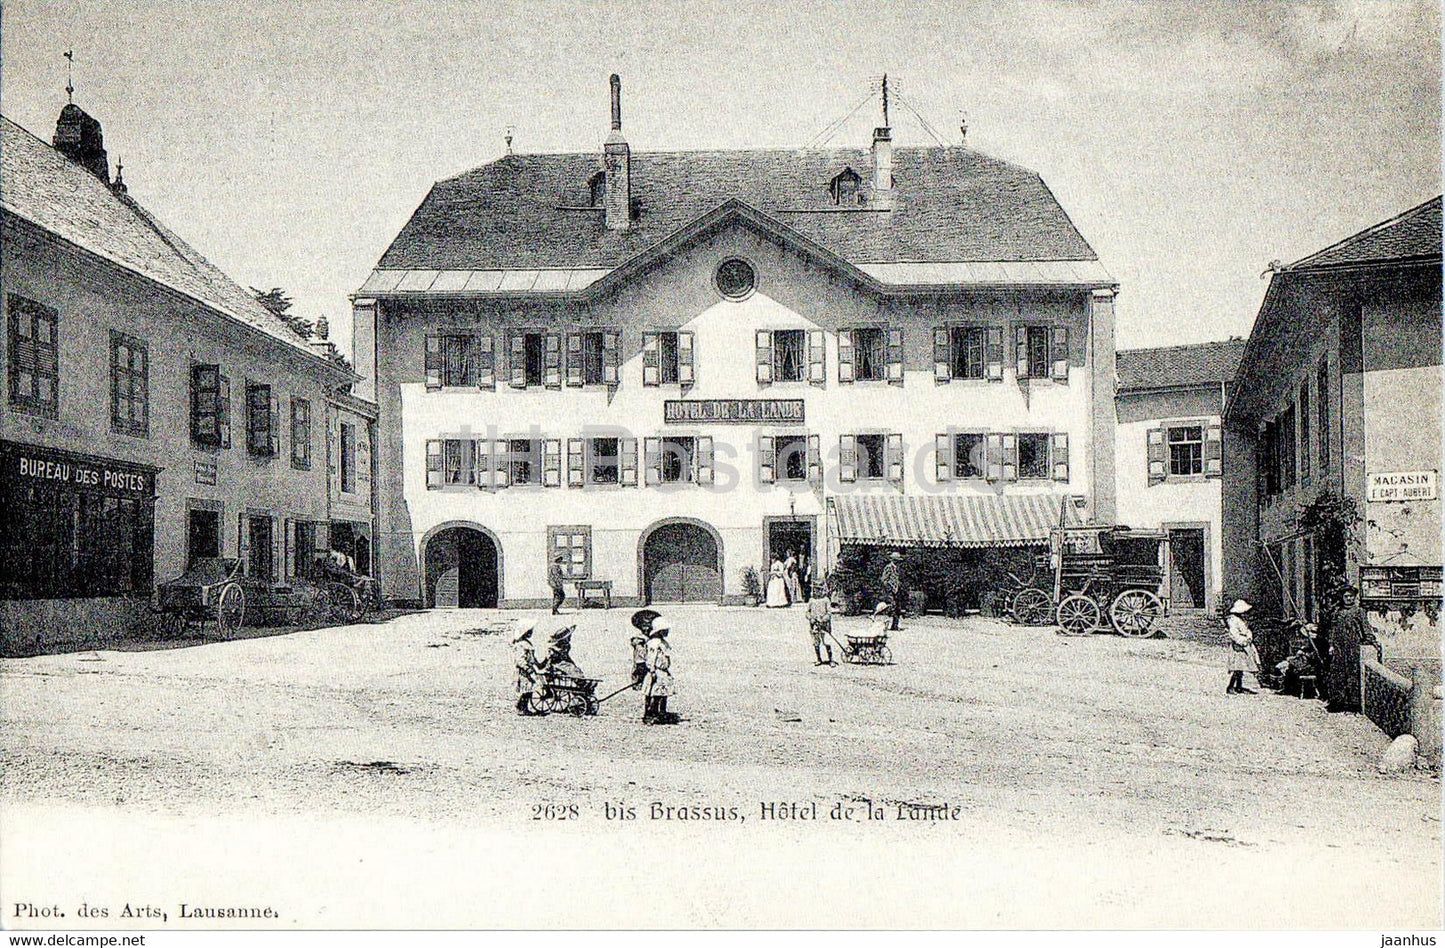 Bis Brassus - Hotel de la Lande - 1 - REPRODUCTION - Switzerland - unused - JH Postcards